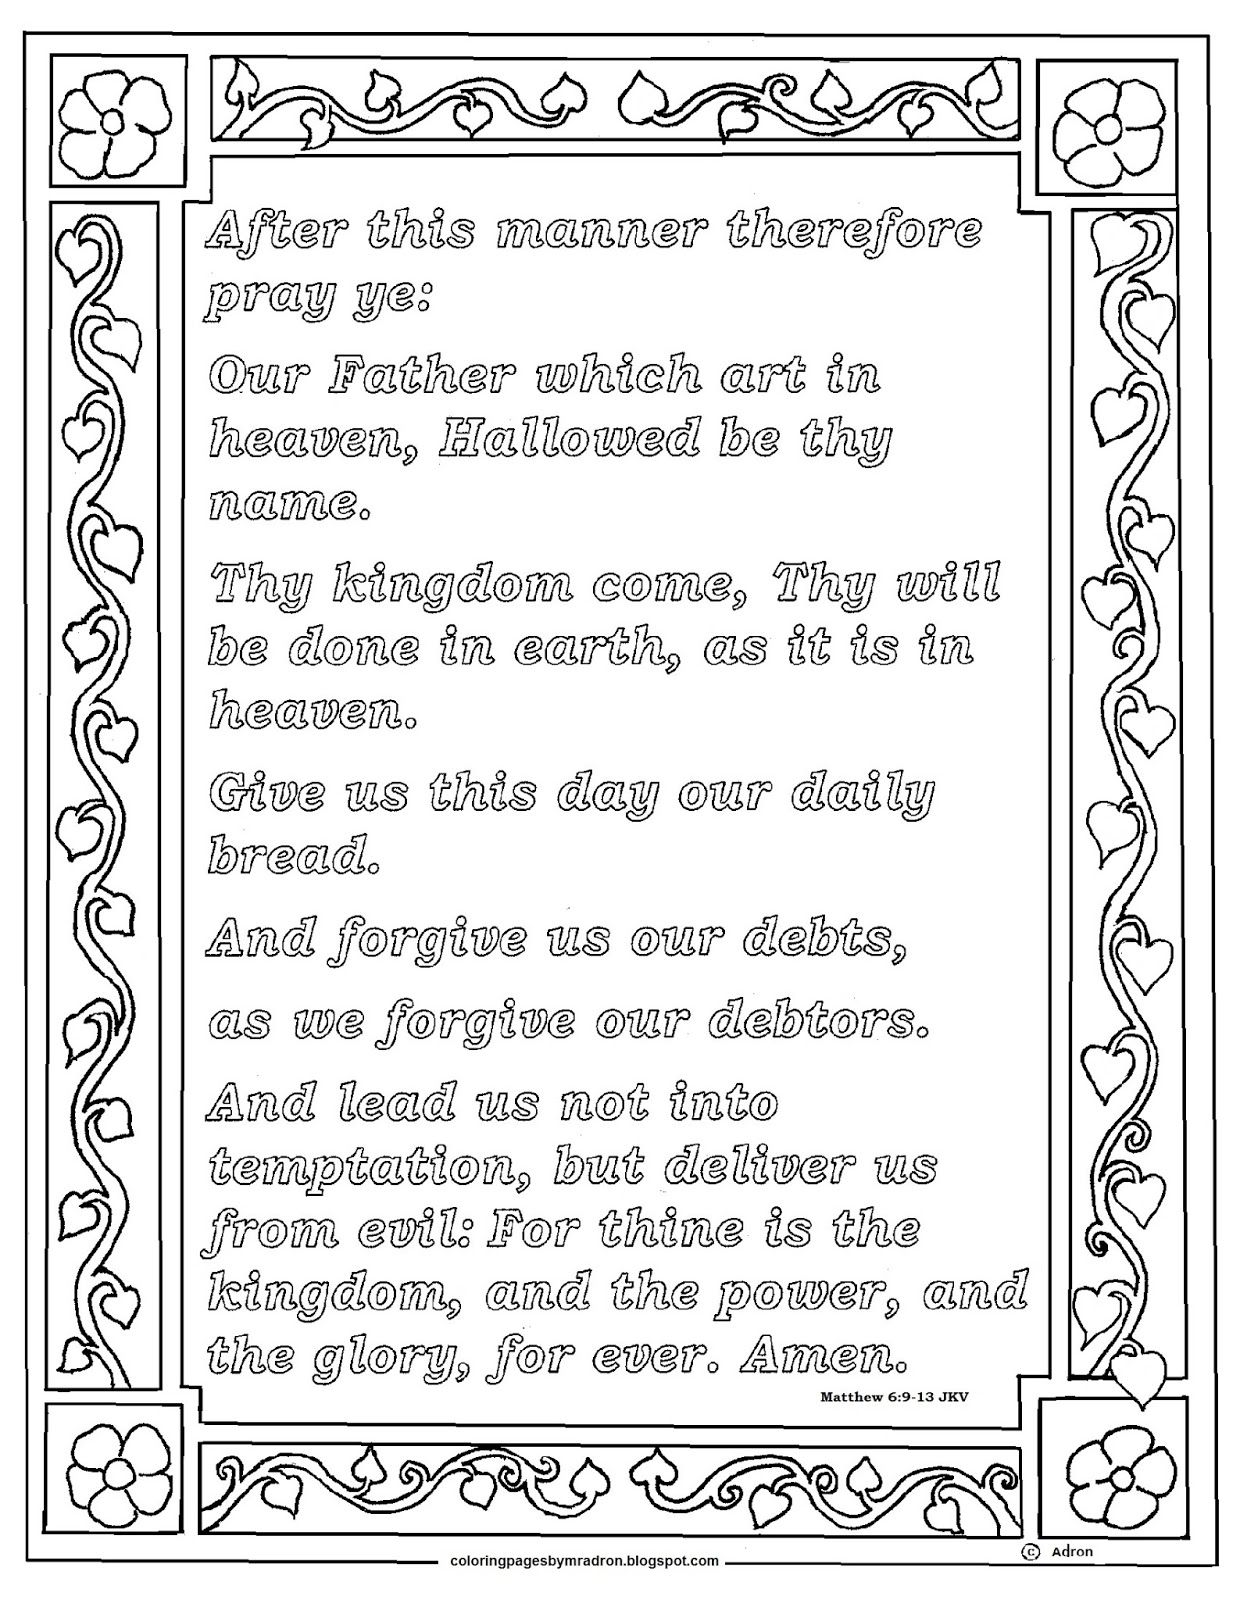 The Lord's Prayer Kjv Printable